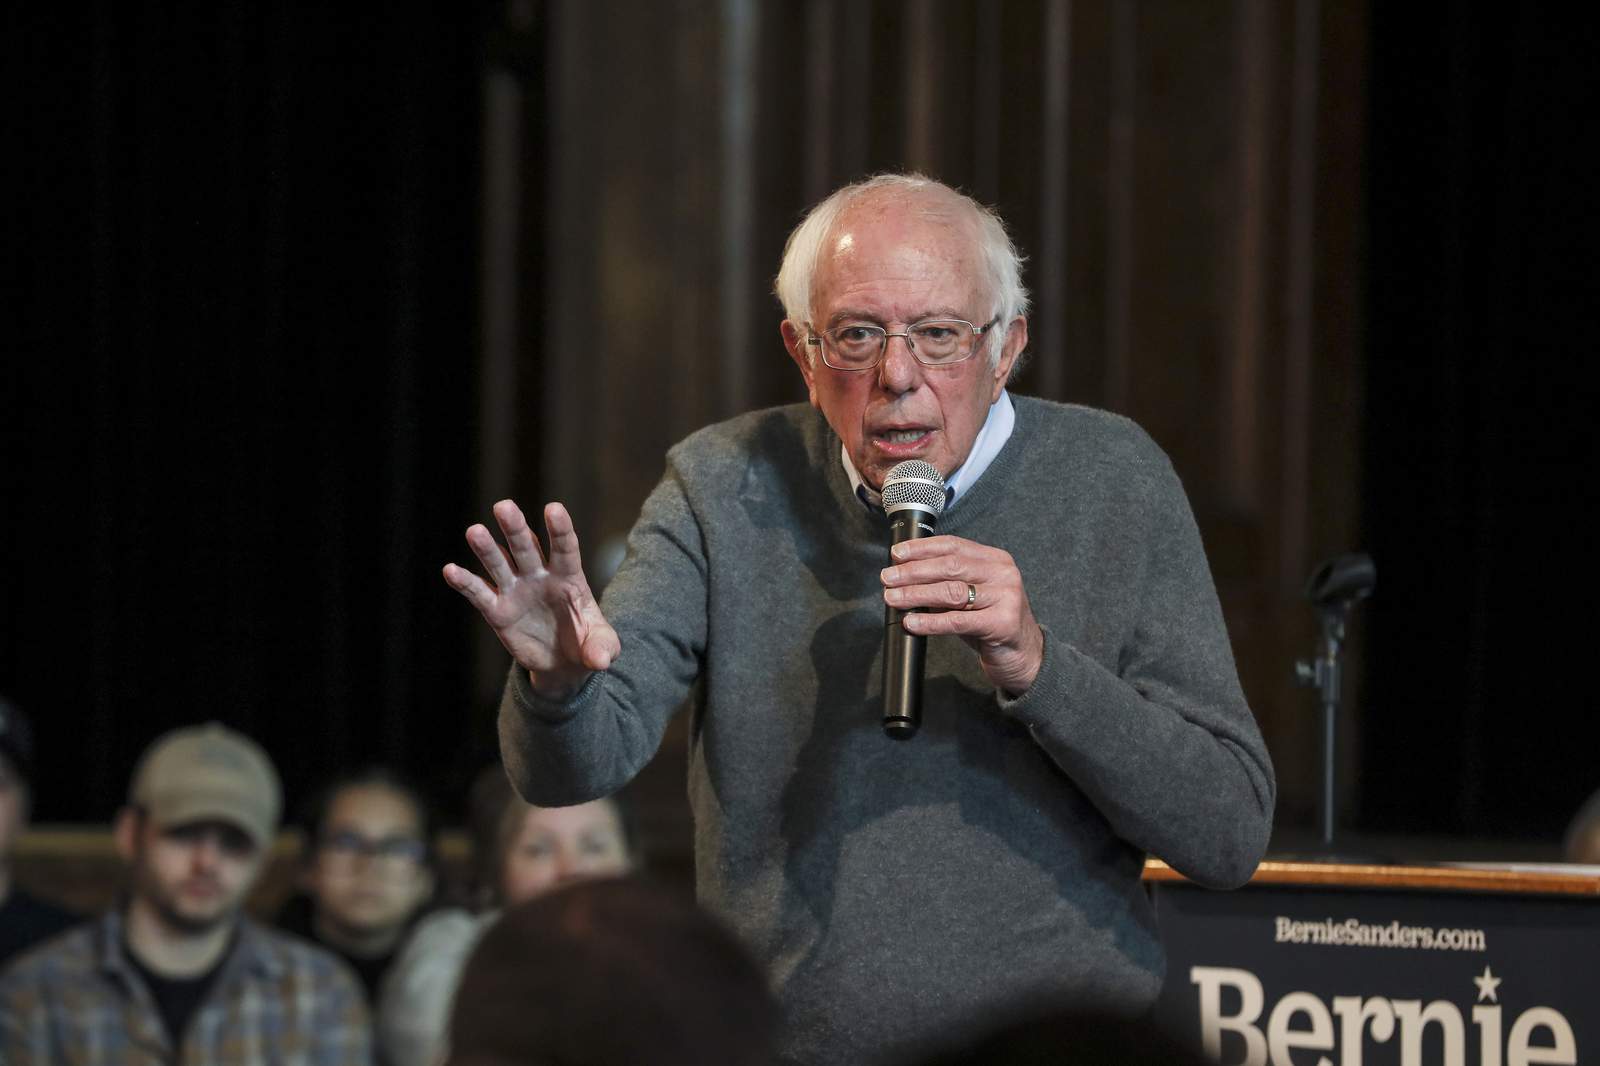 Sanders says he'll enact national drinking water standards